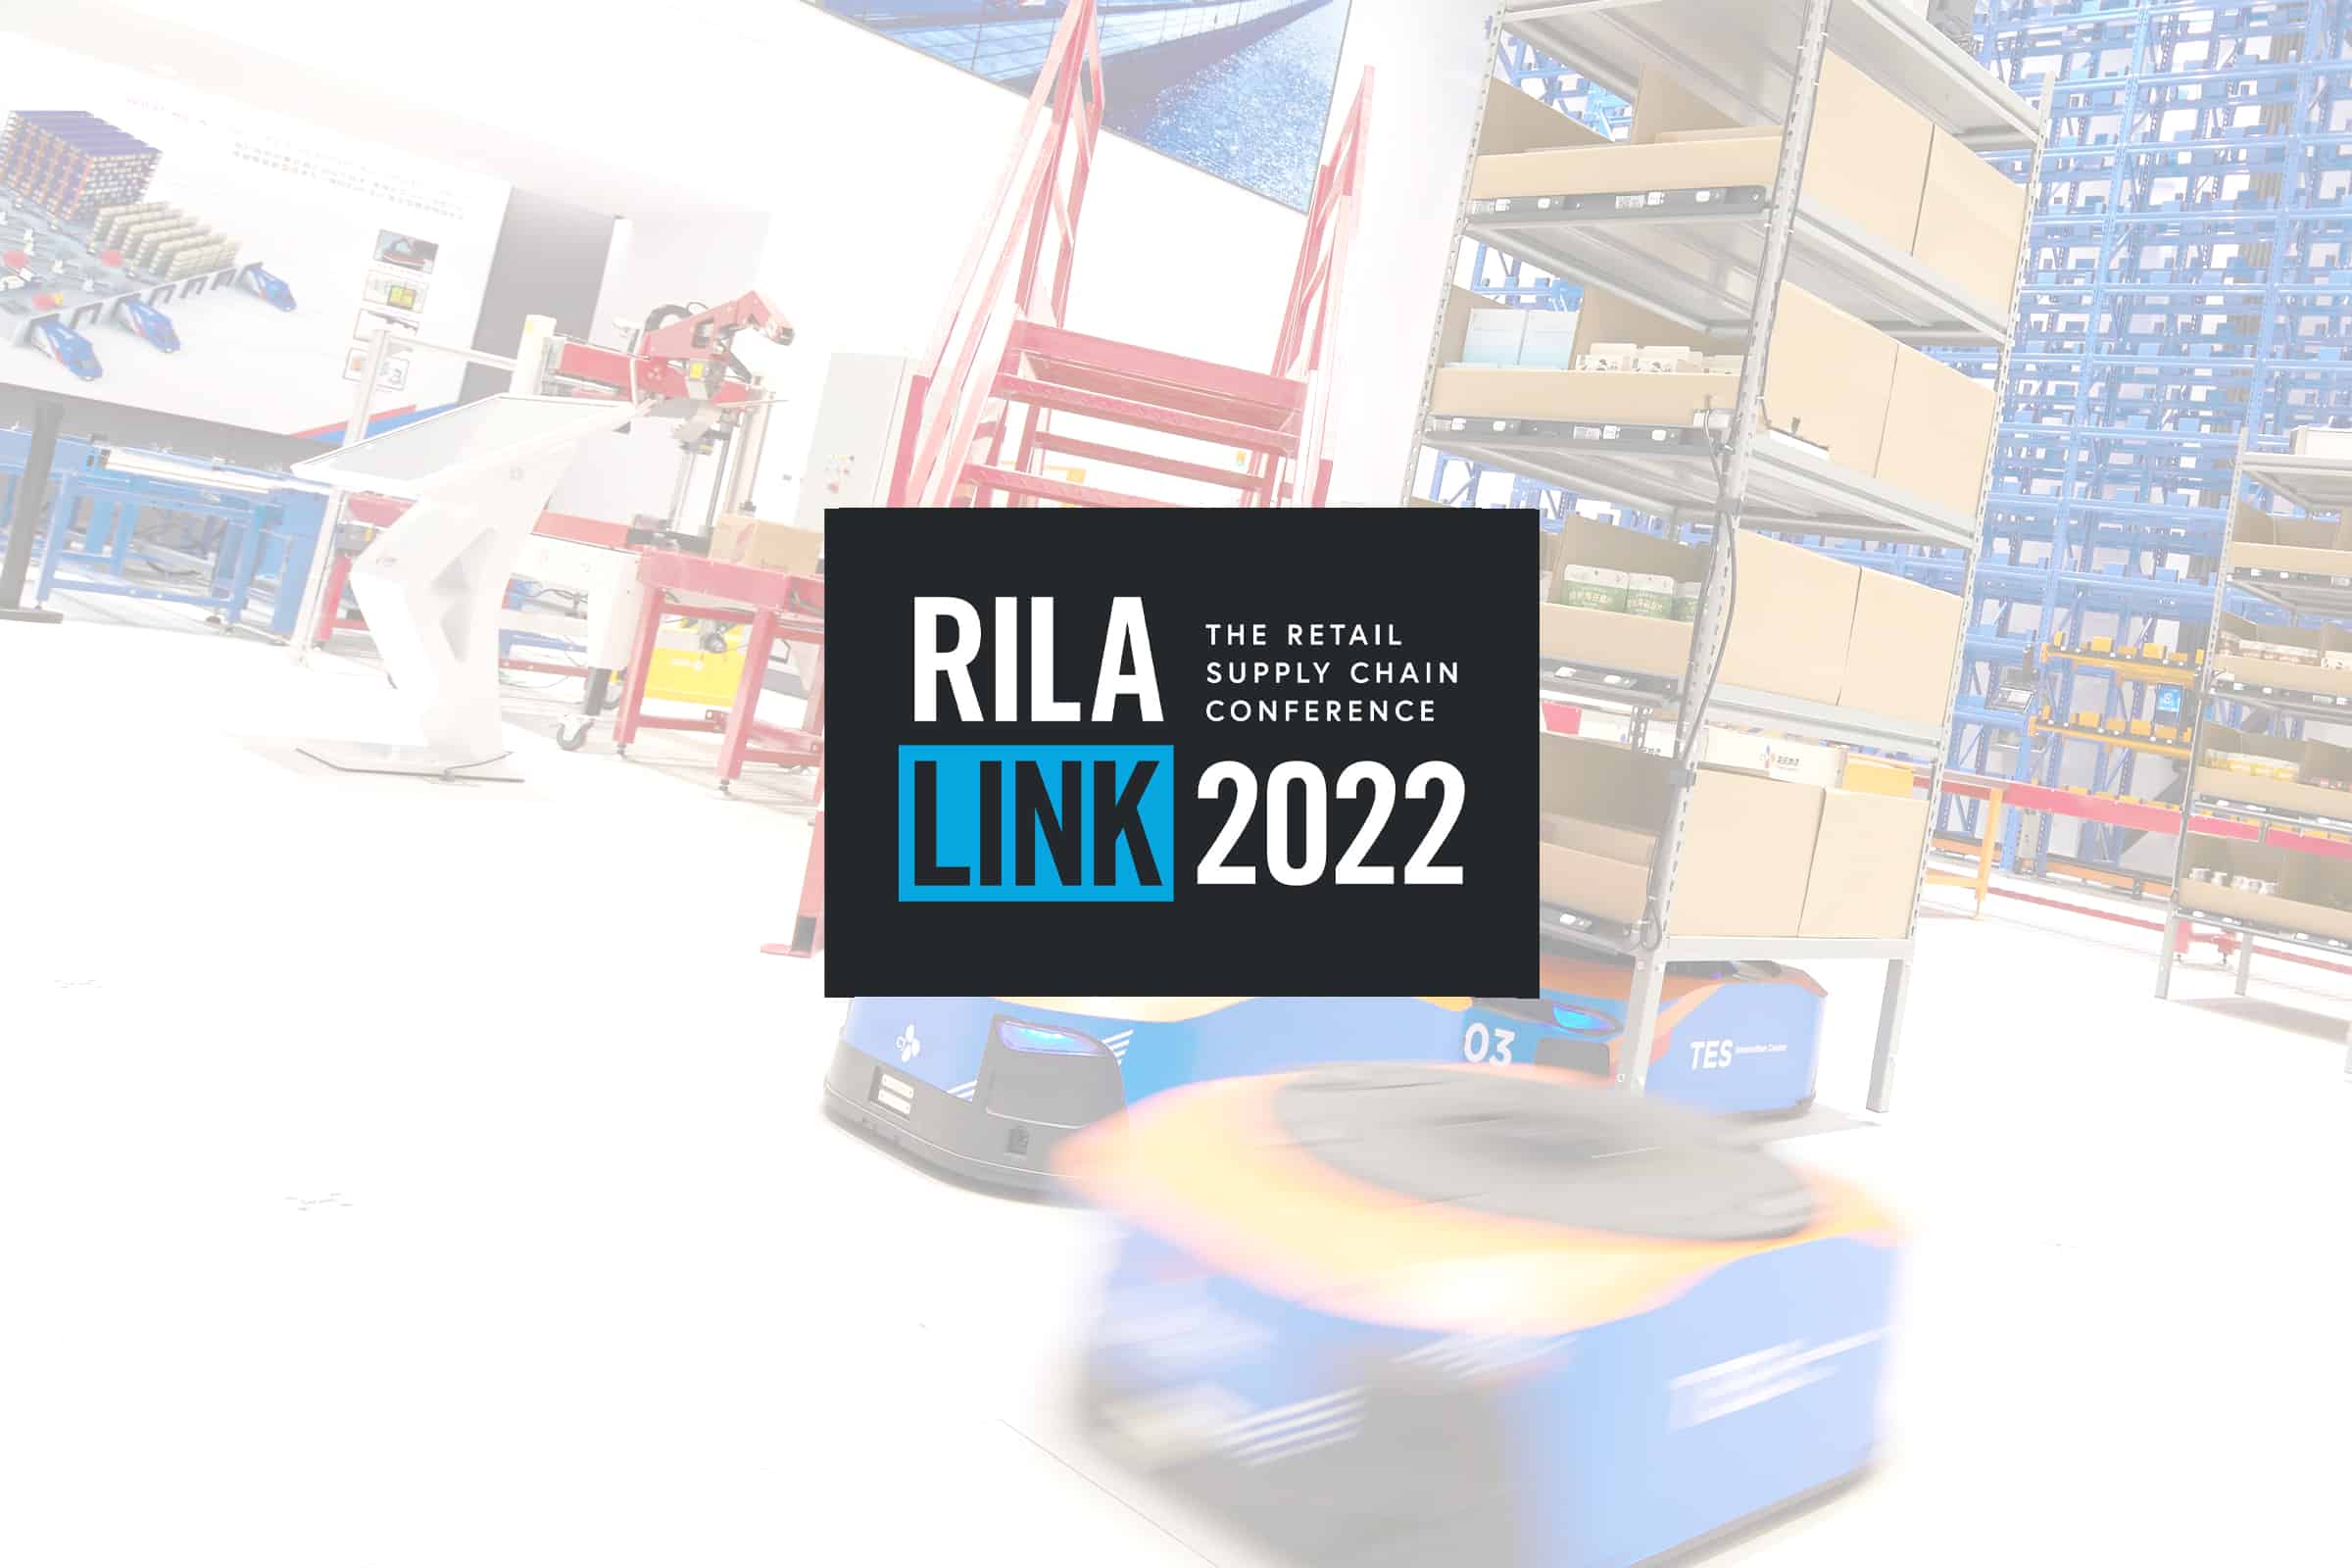 cj logistics america, 3pl, 3pls, RILA, LINK 2022